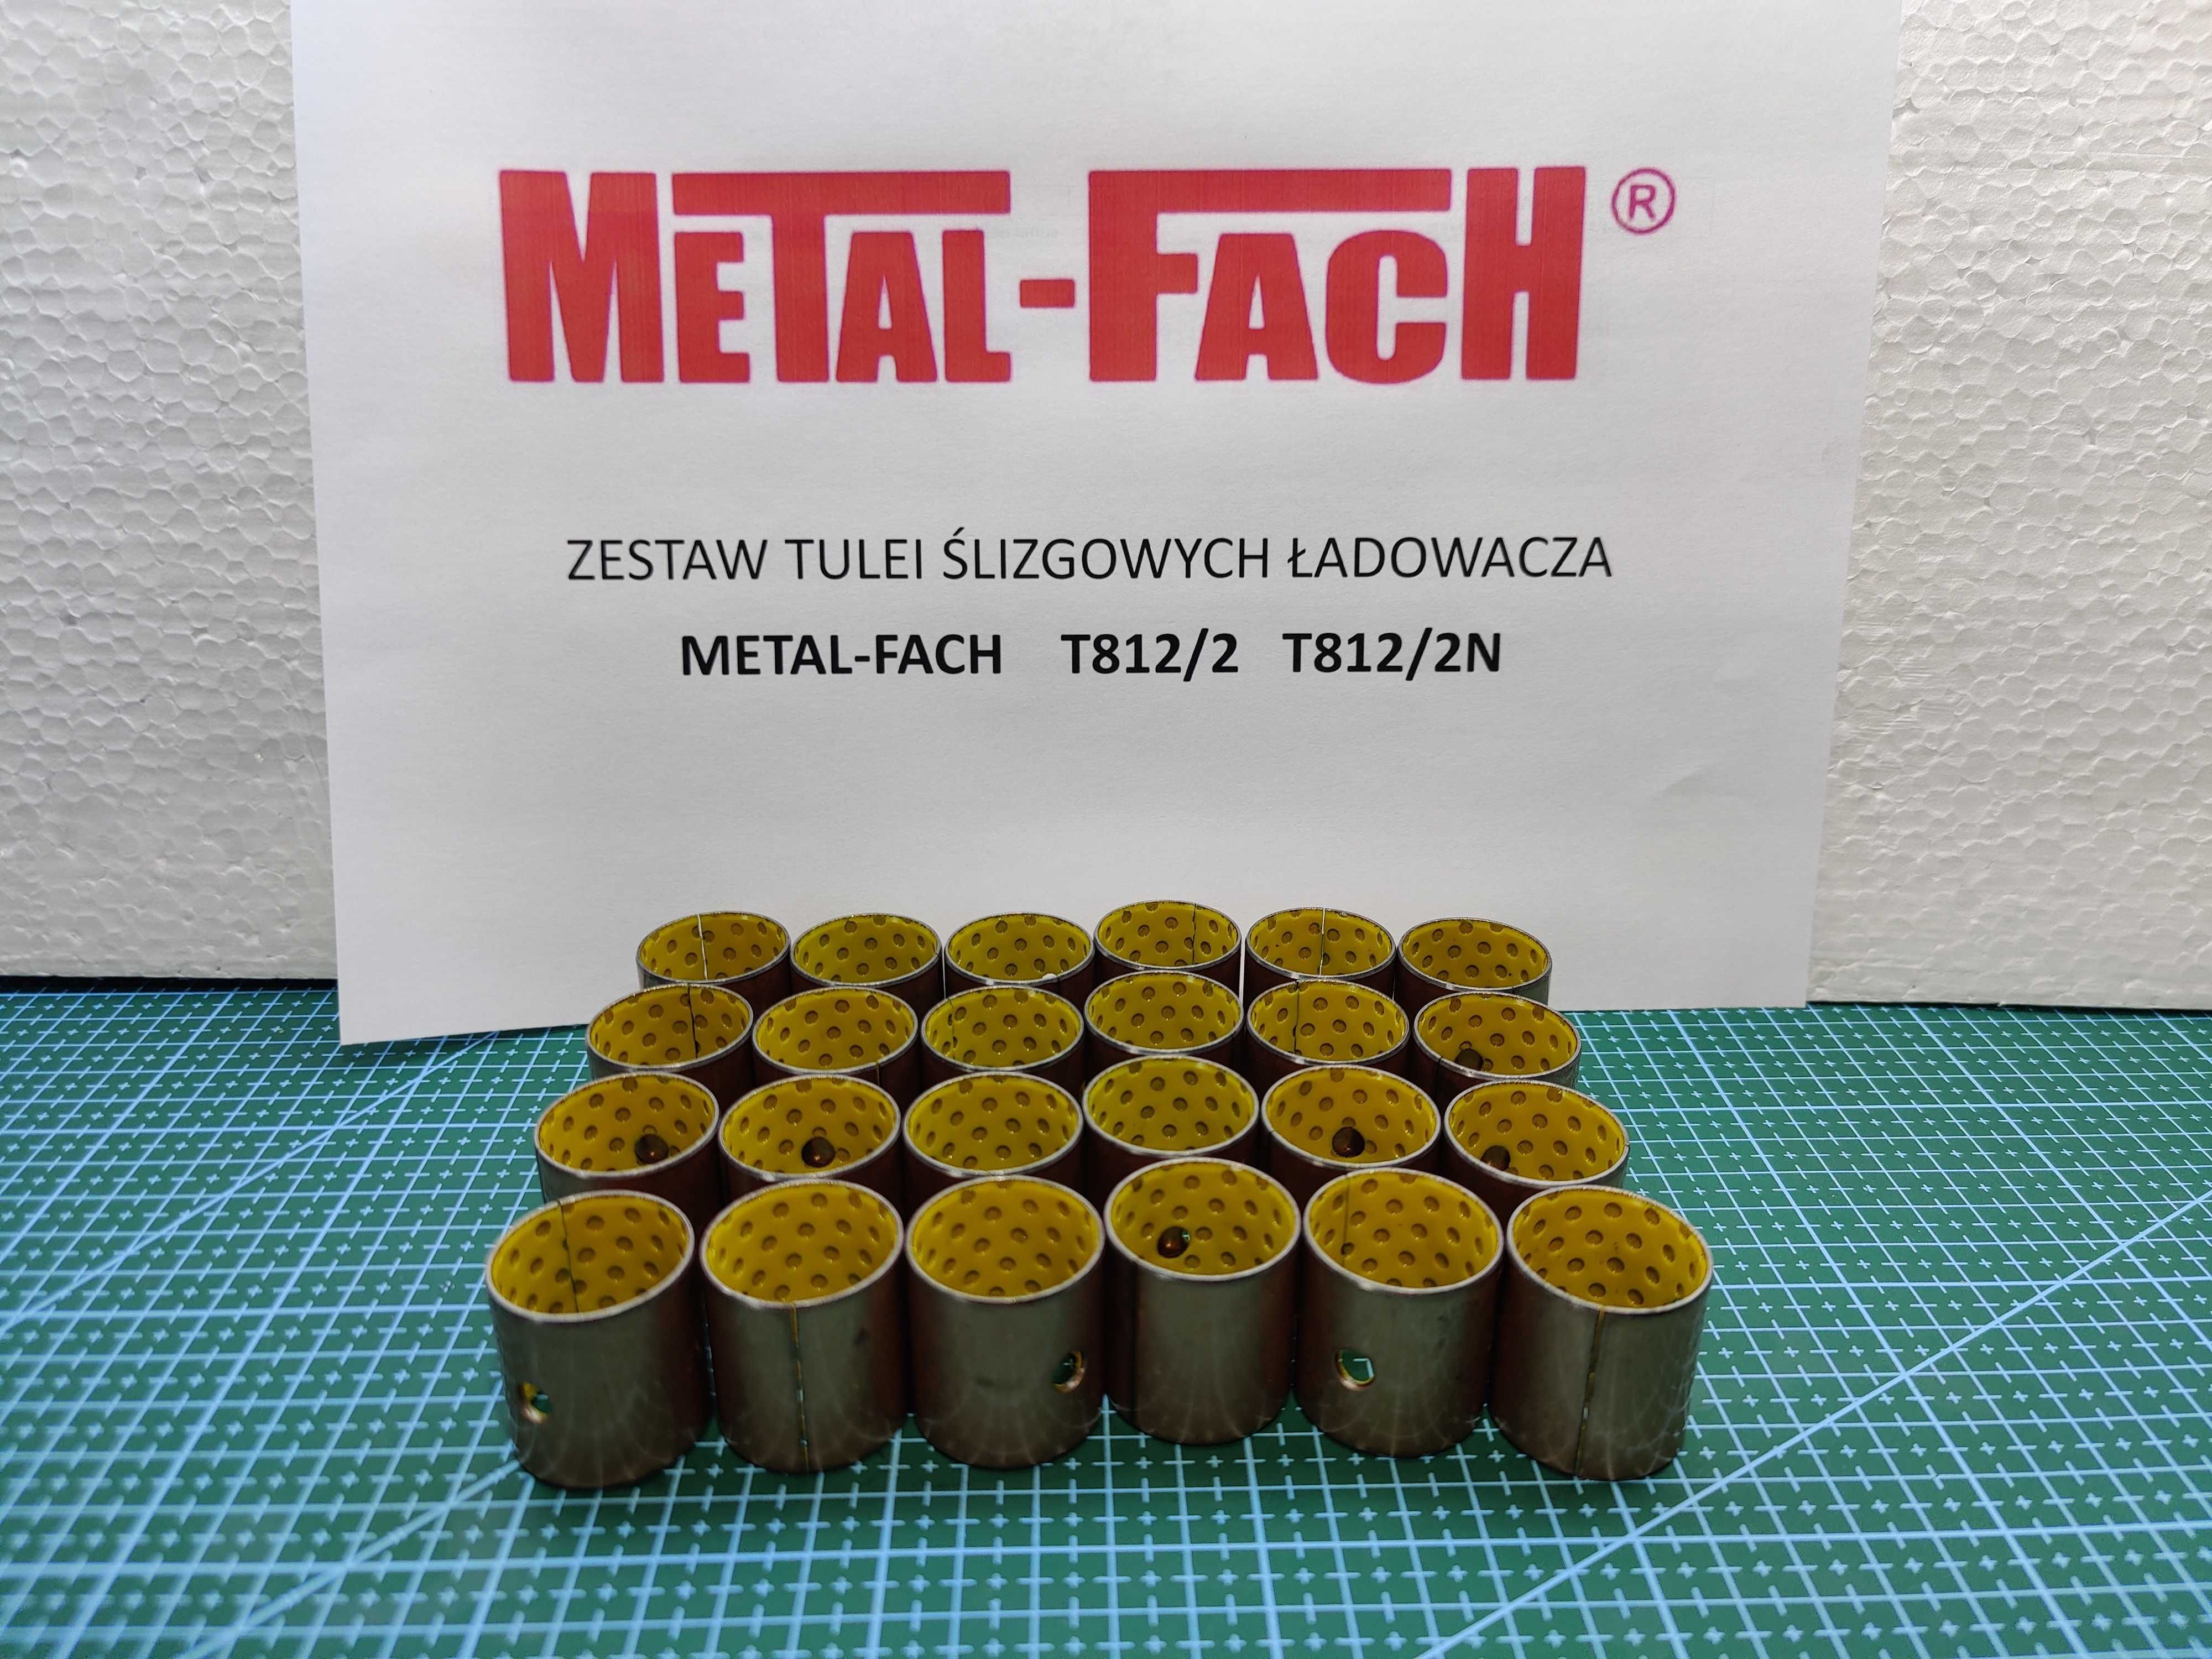 Zestaw tulei ładowacza METAL-FACH T812/2 T812/2N